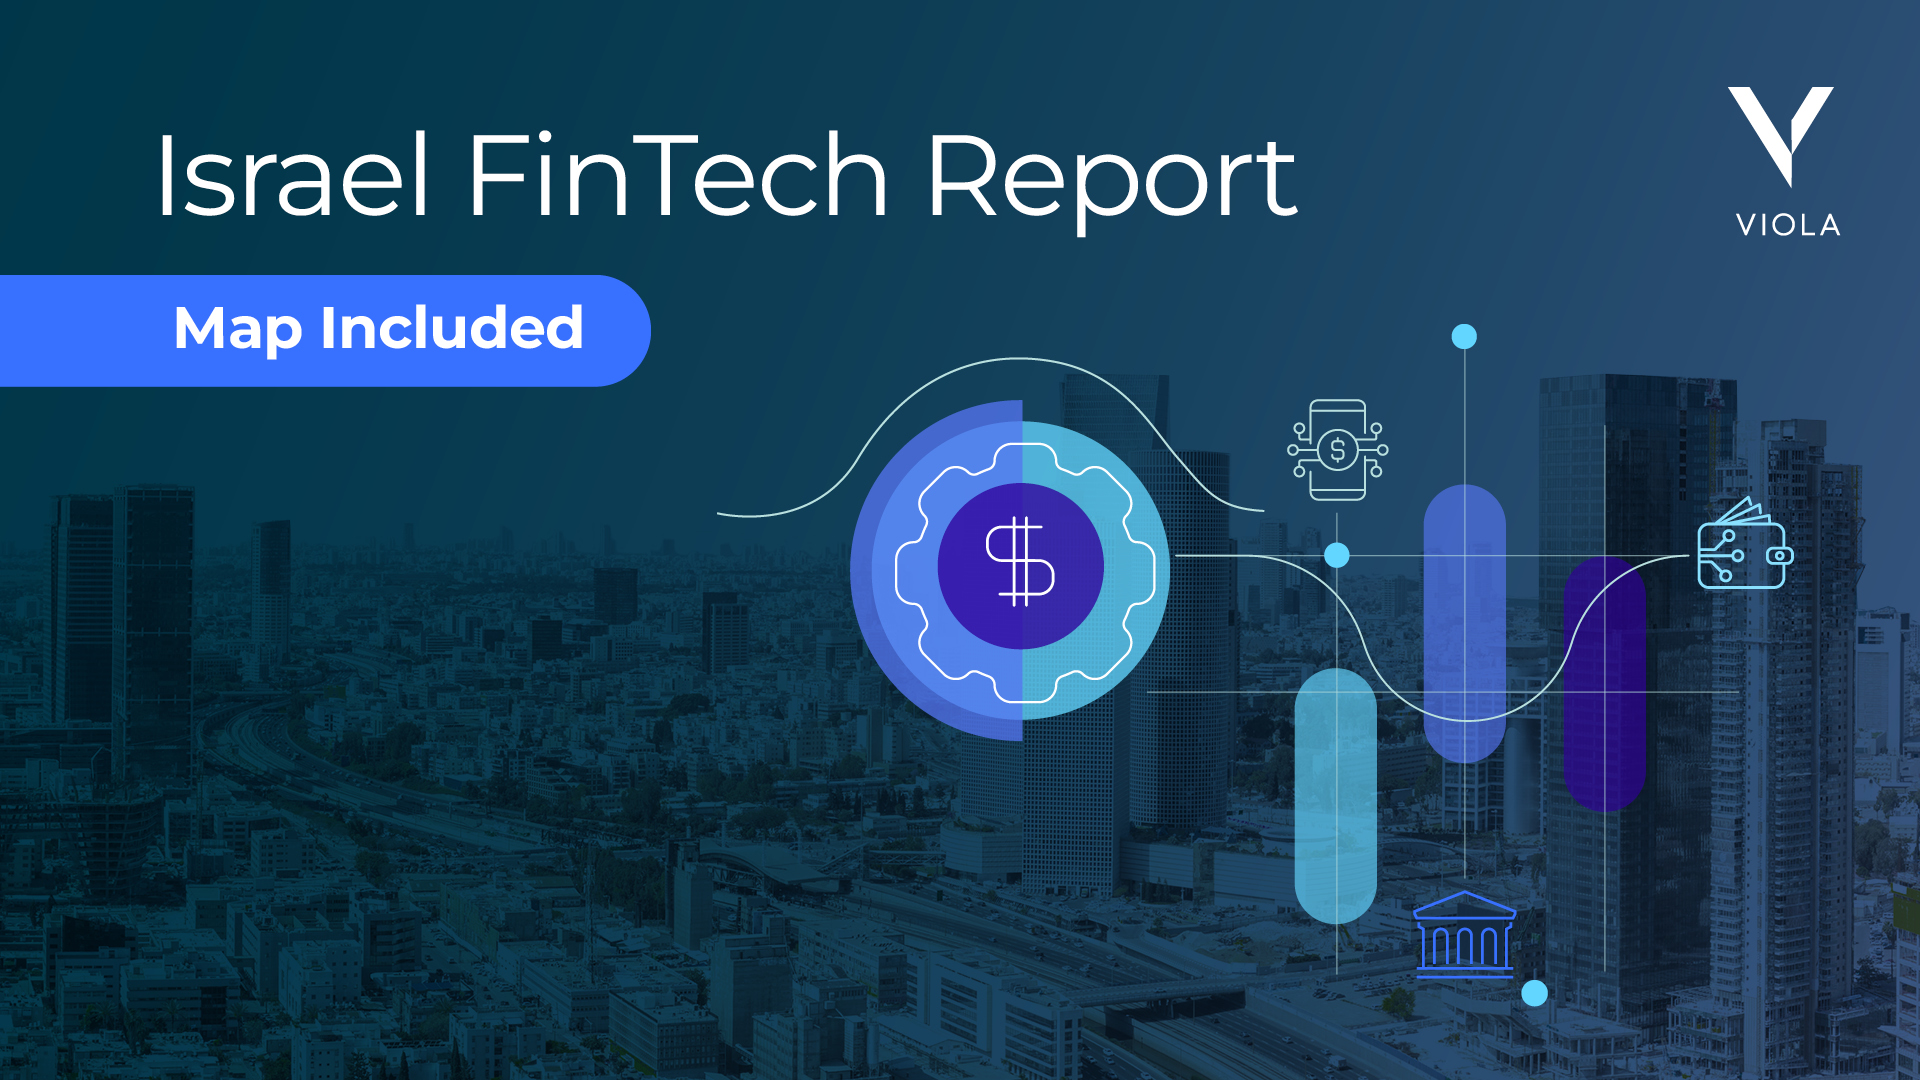 Viola - Israel Fintech Report & Map